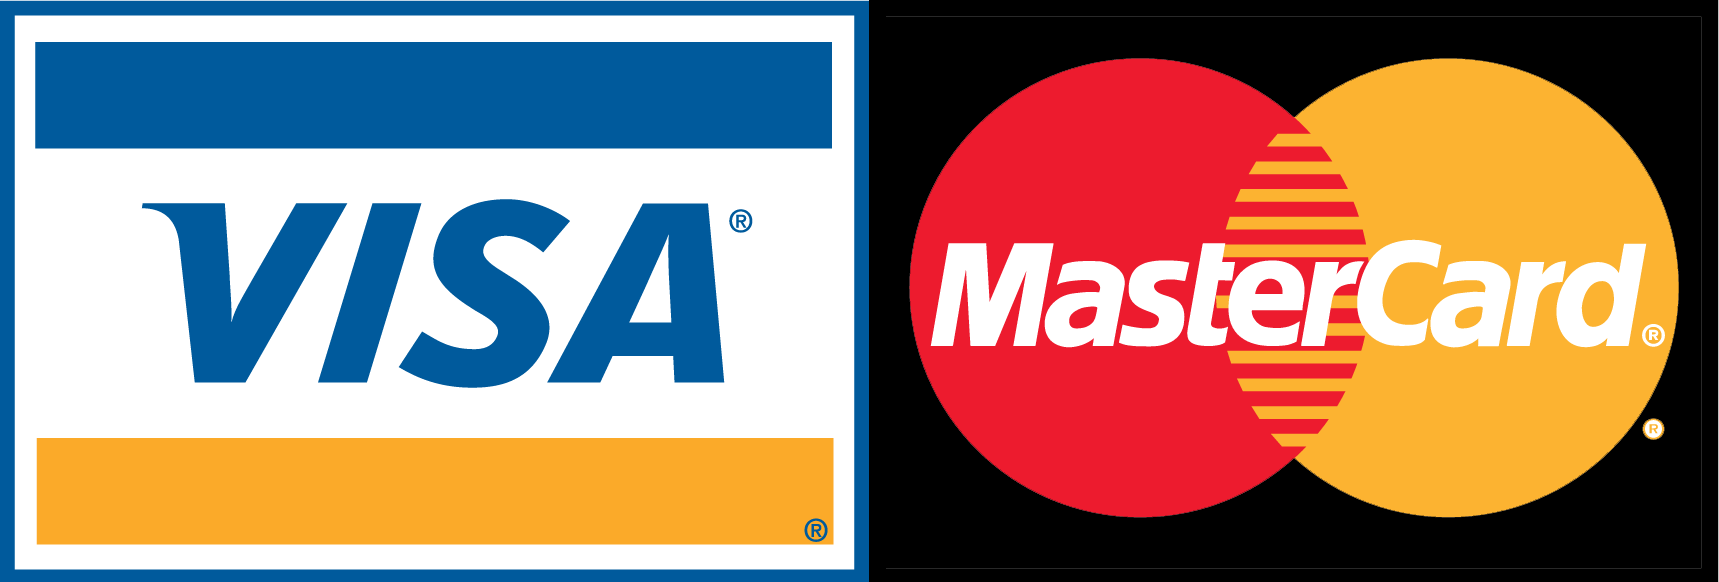 Visa makes. Visa Master. Логотип visa. Значок visa MASTERCARD. Visa на прозрачном фоне.